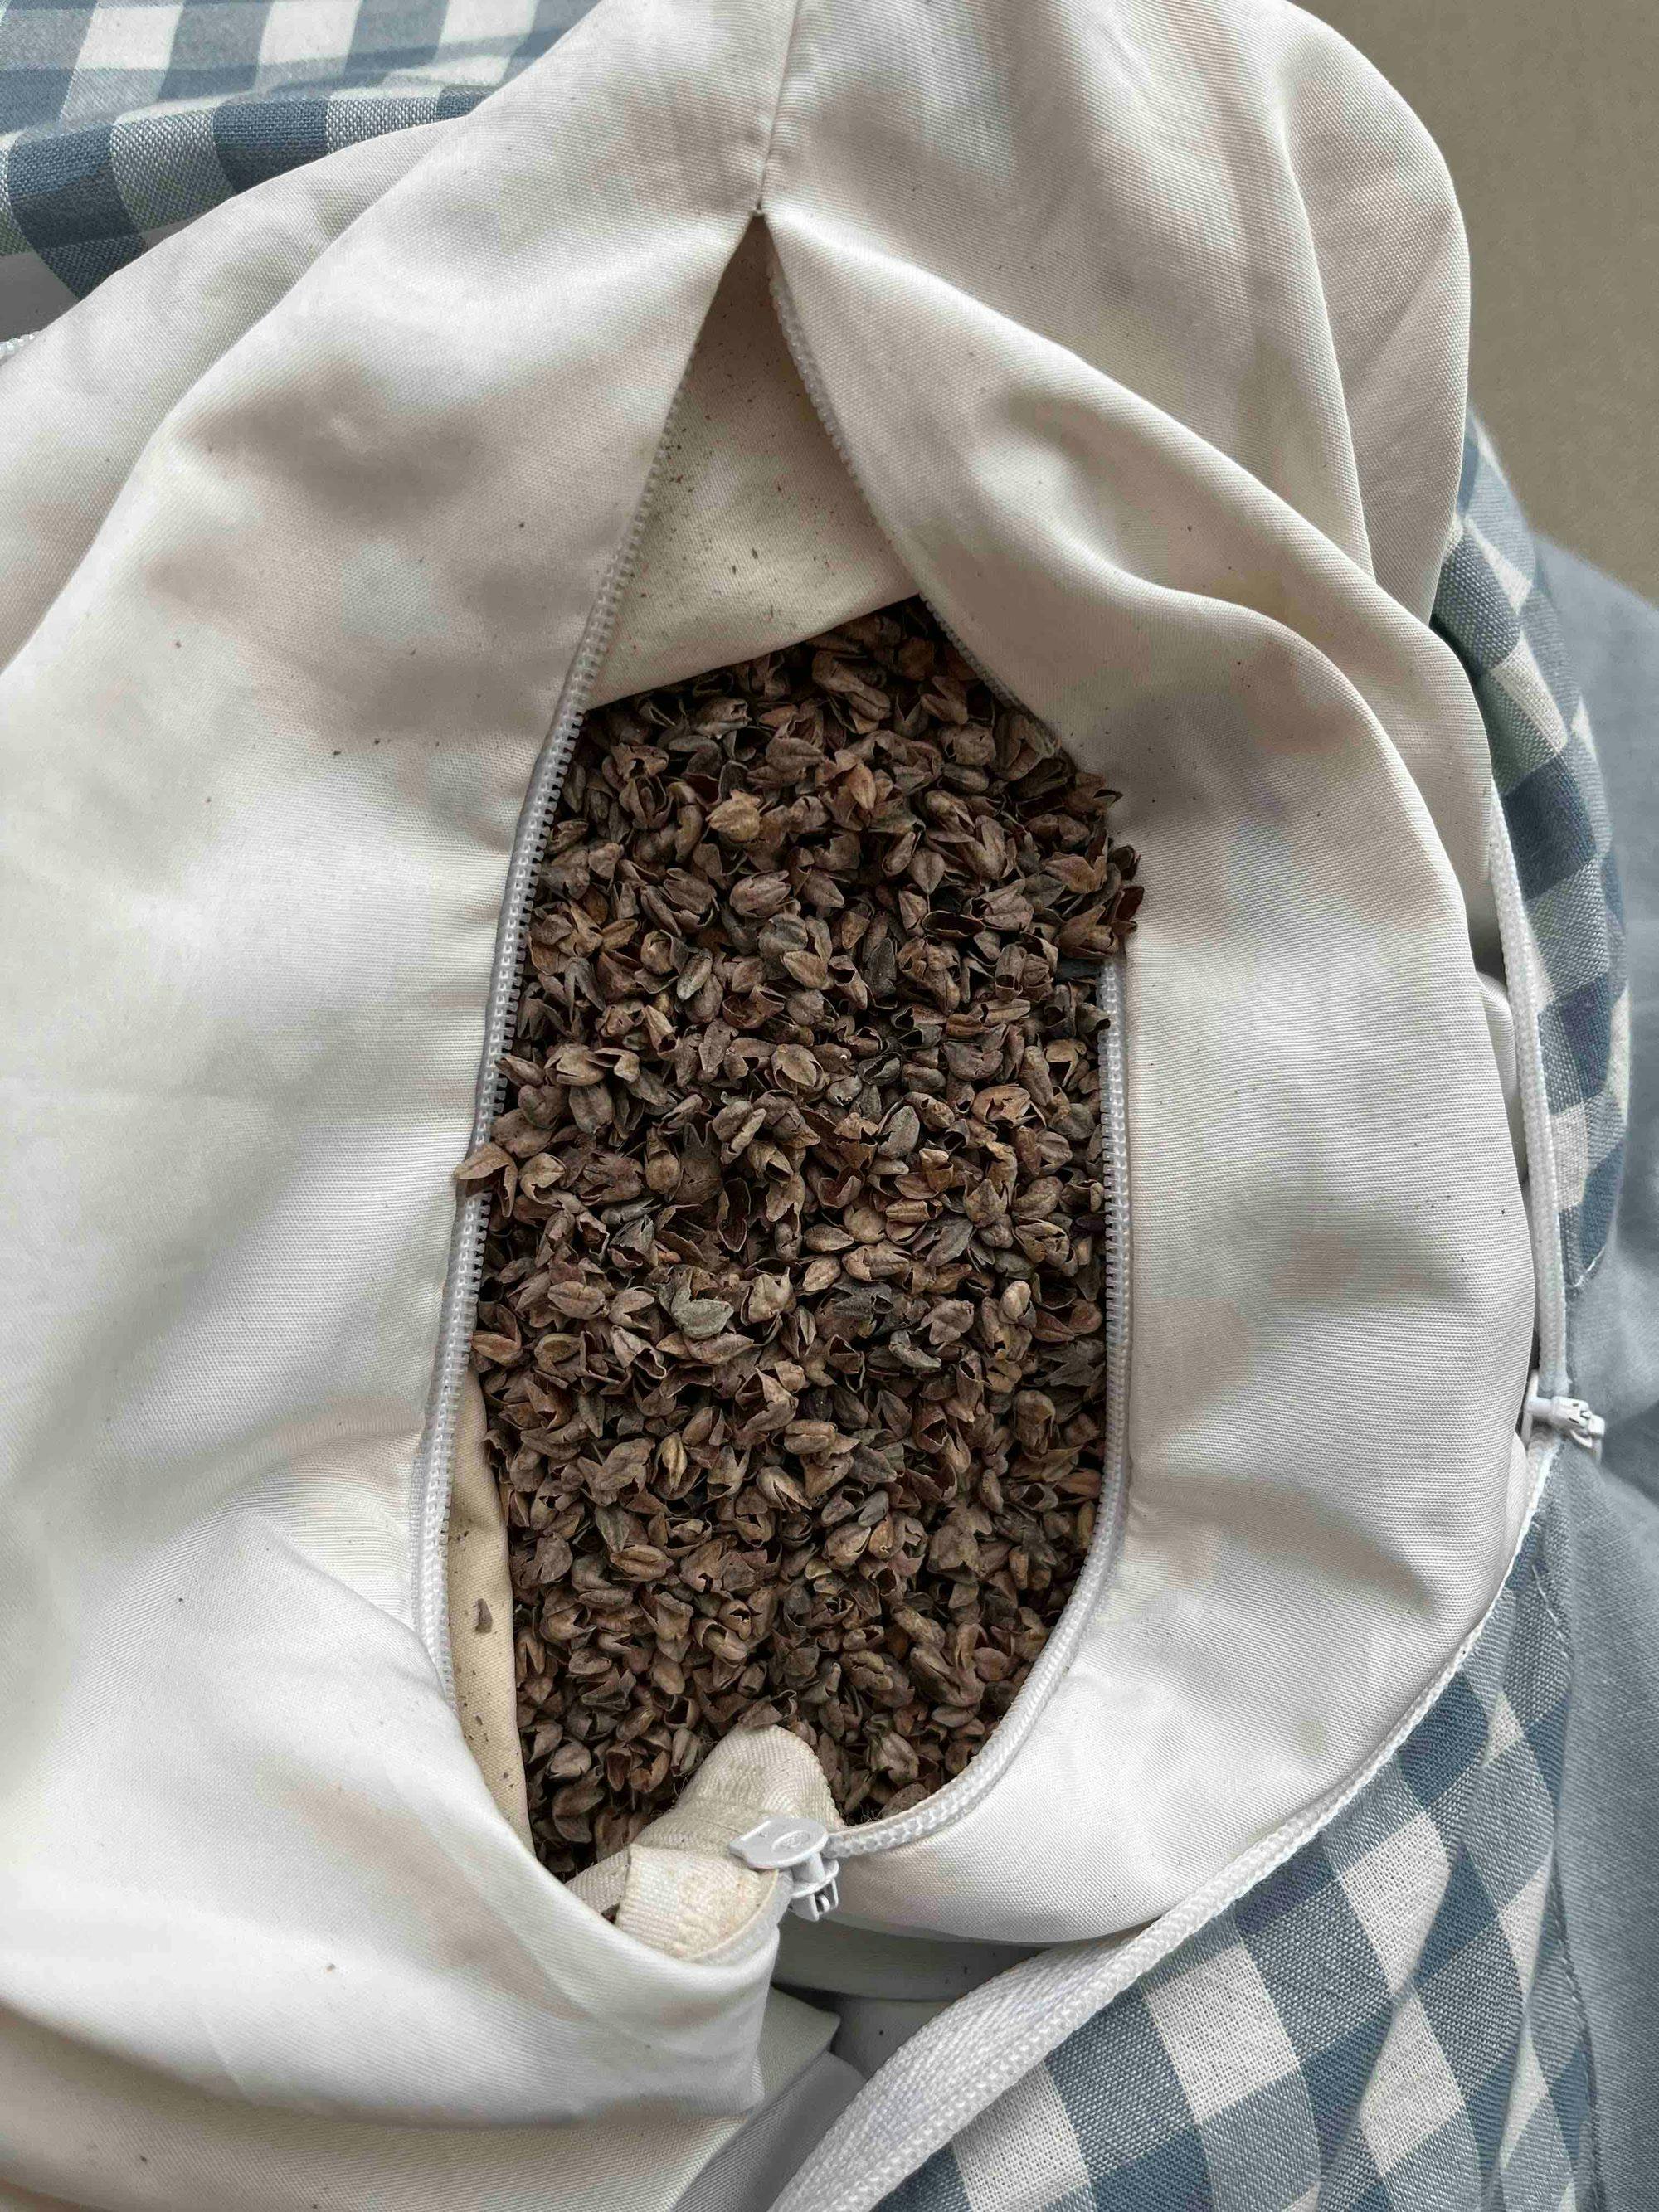 Buckwheat hull inside a buckwheat pillow